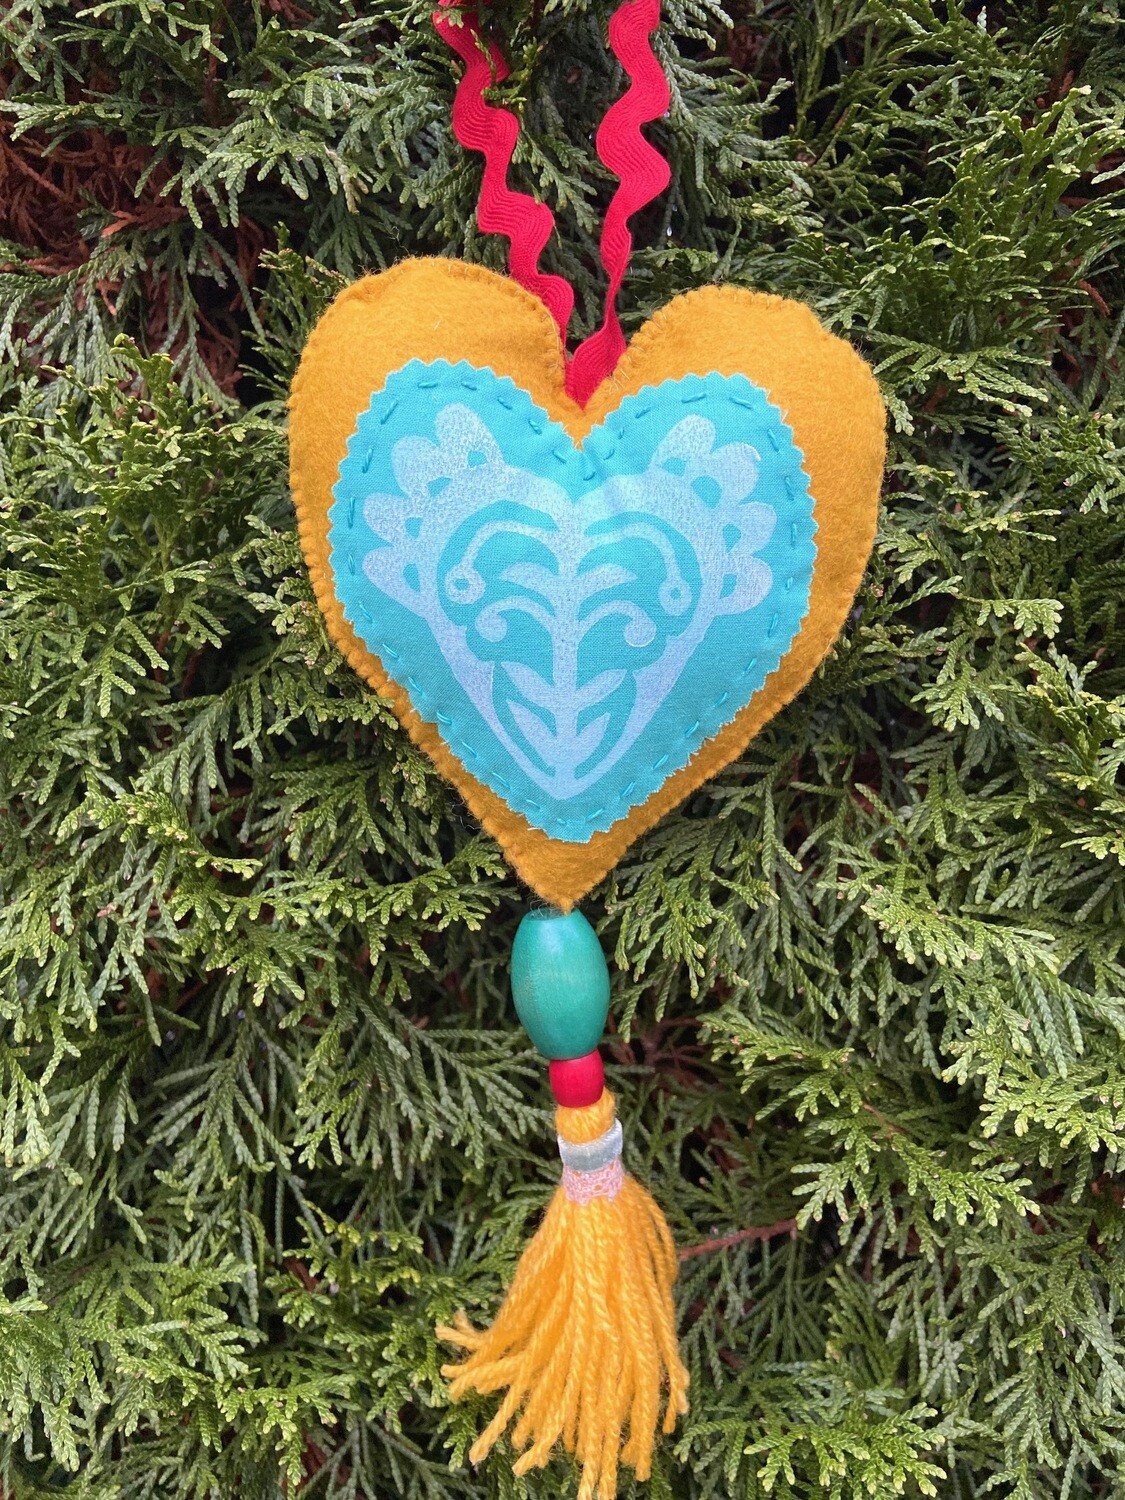 Heart Ornament